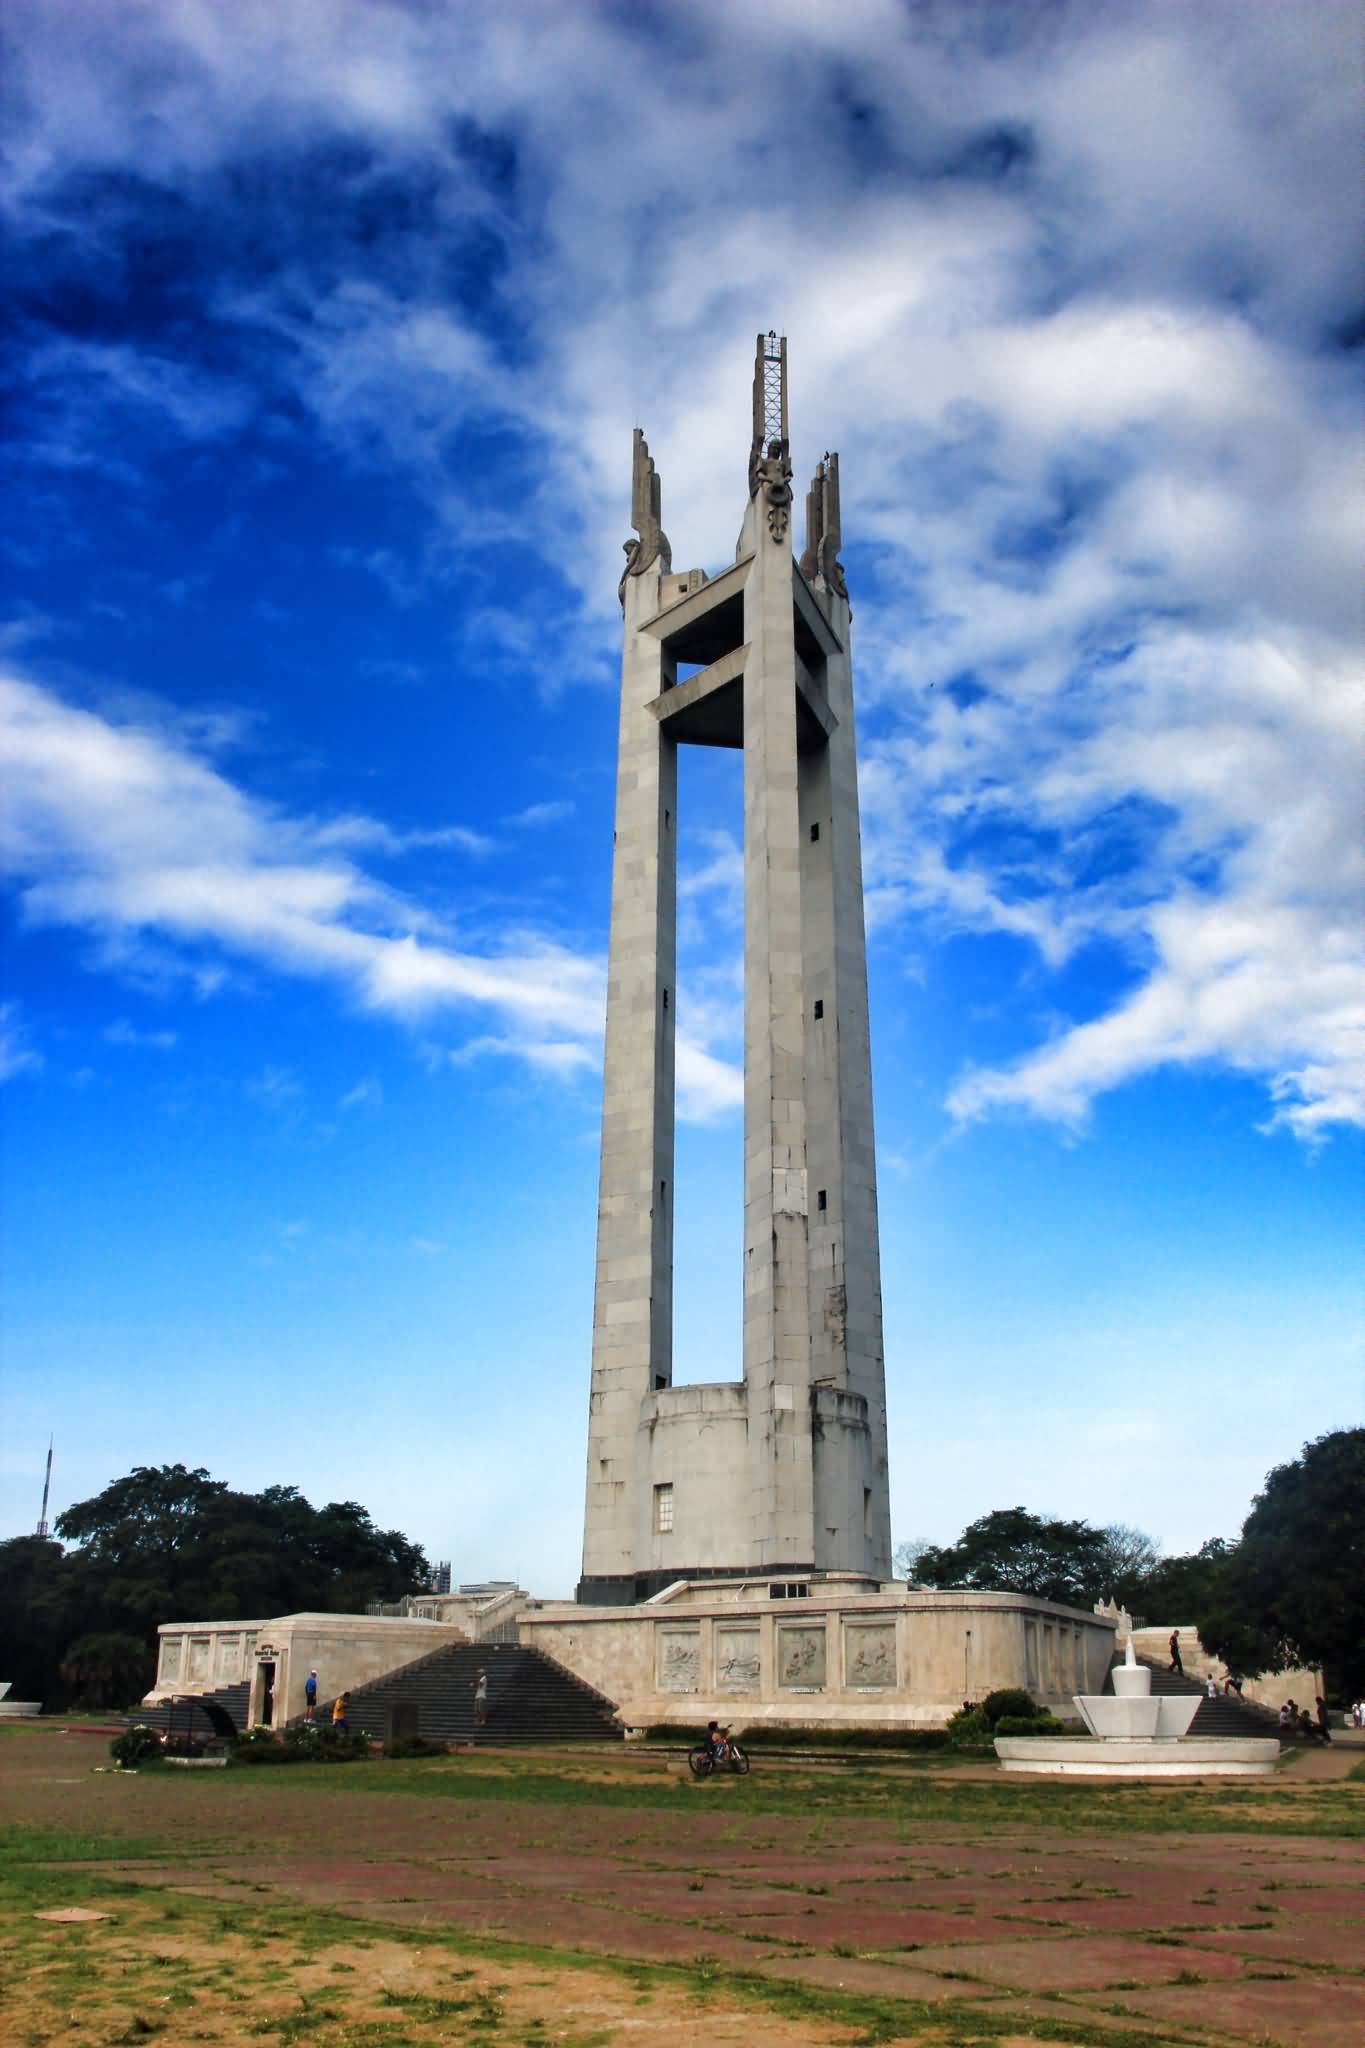 The Quezon Memorial Shrine At National Park